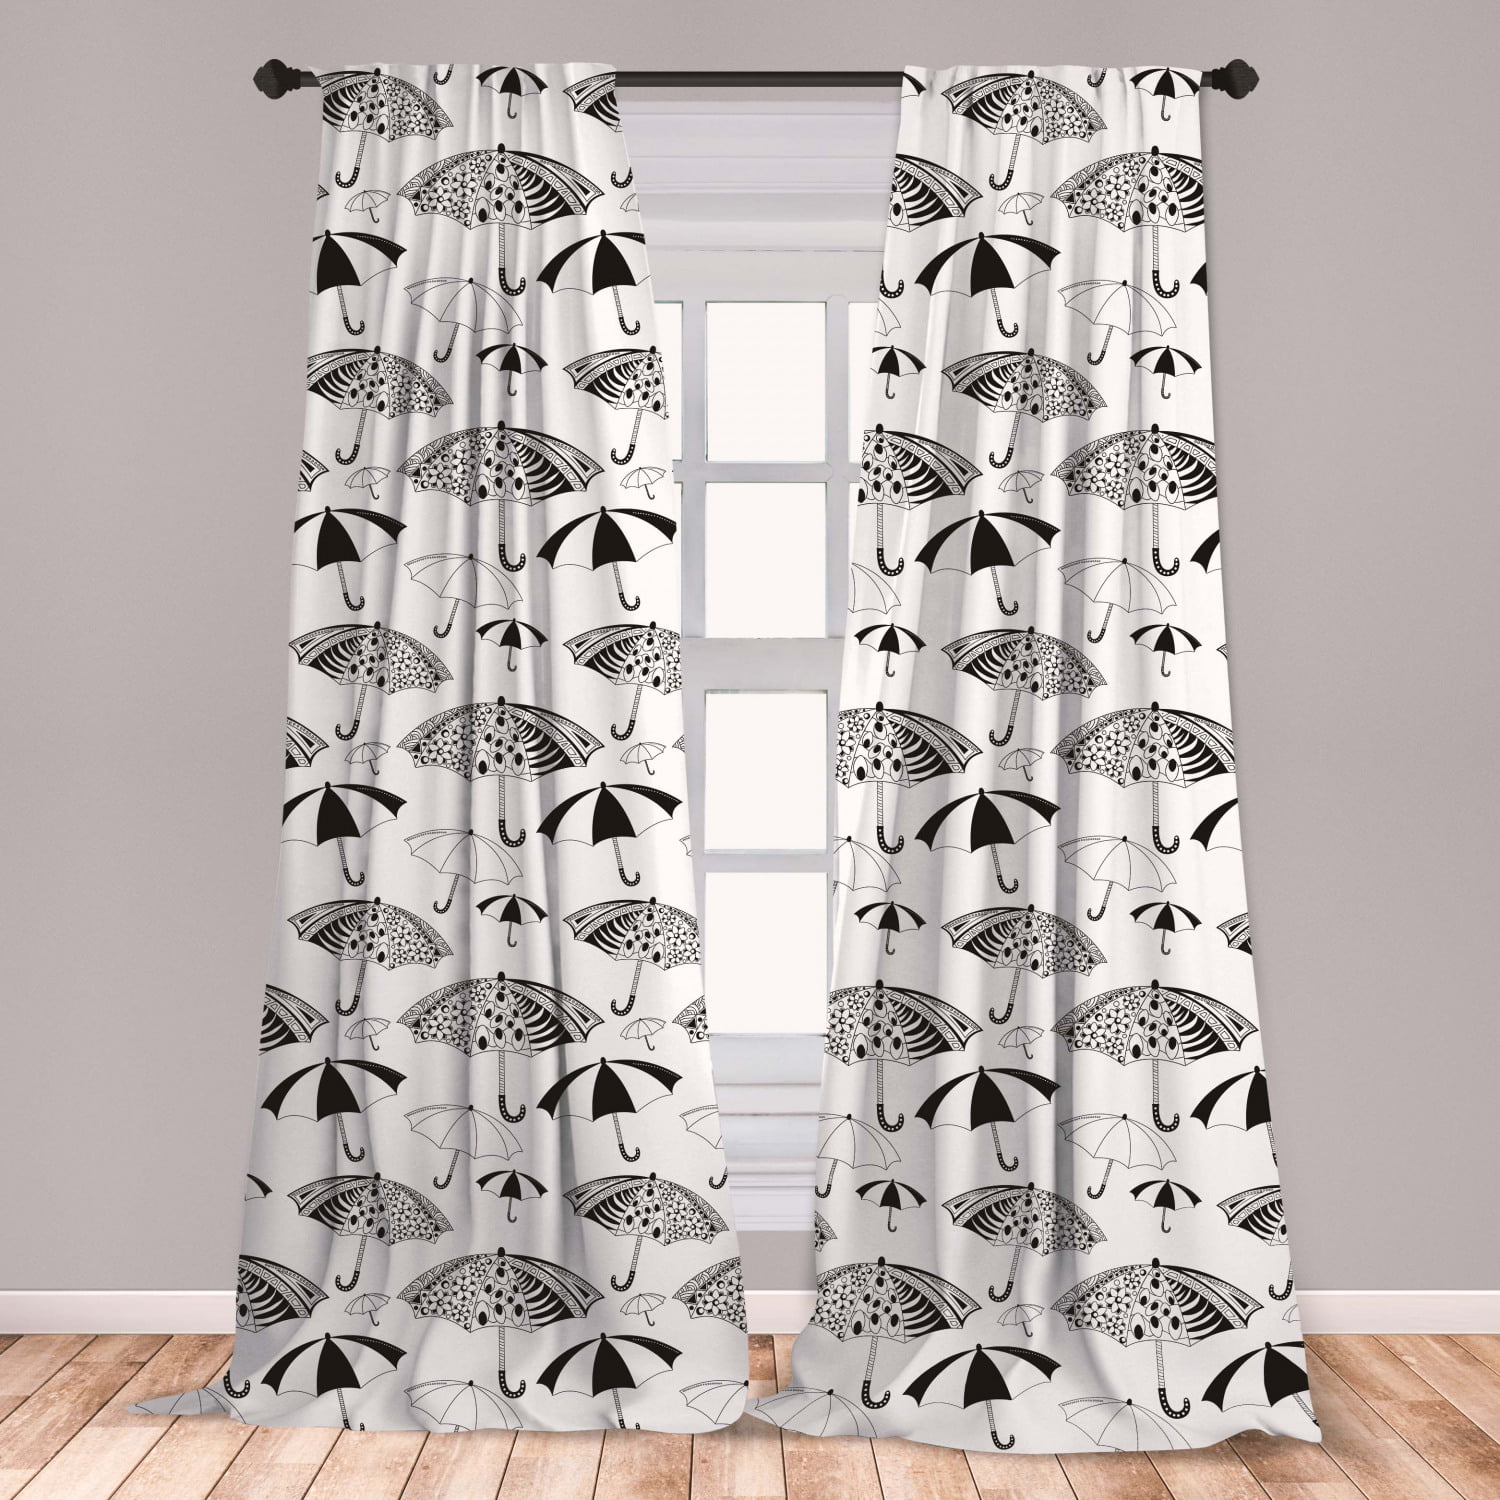 Black and White Curtains 2 Panels Set, Ornate Umbrella with Minimalist